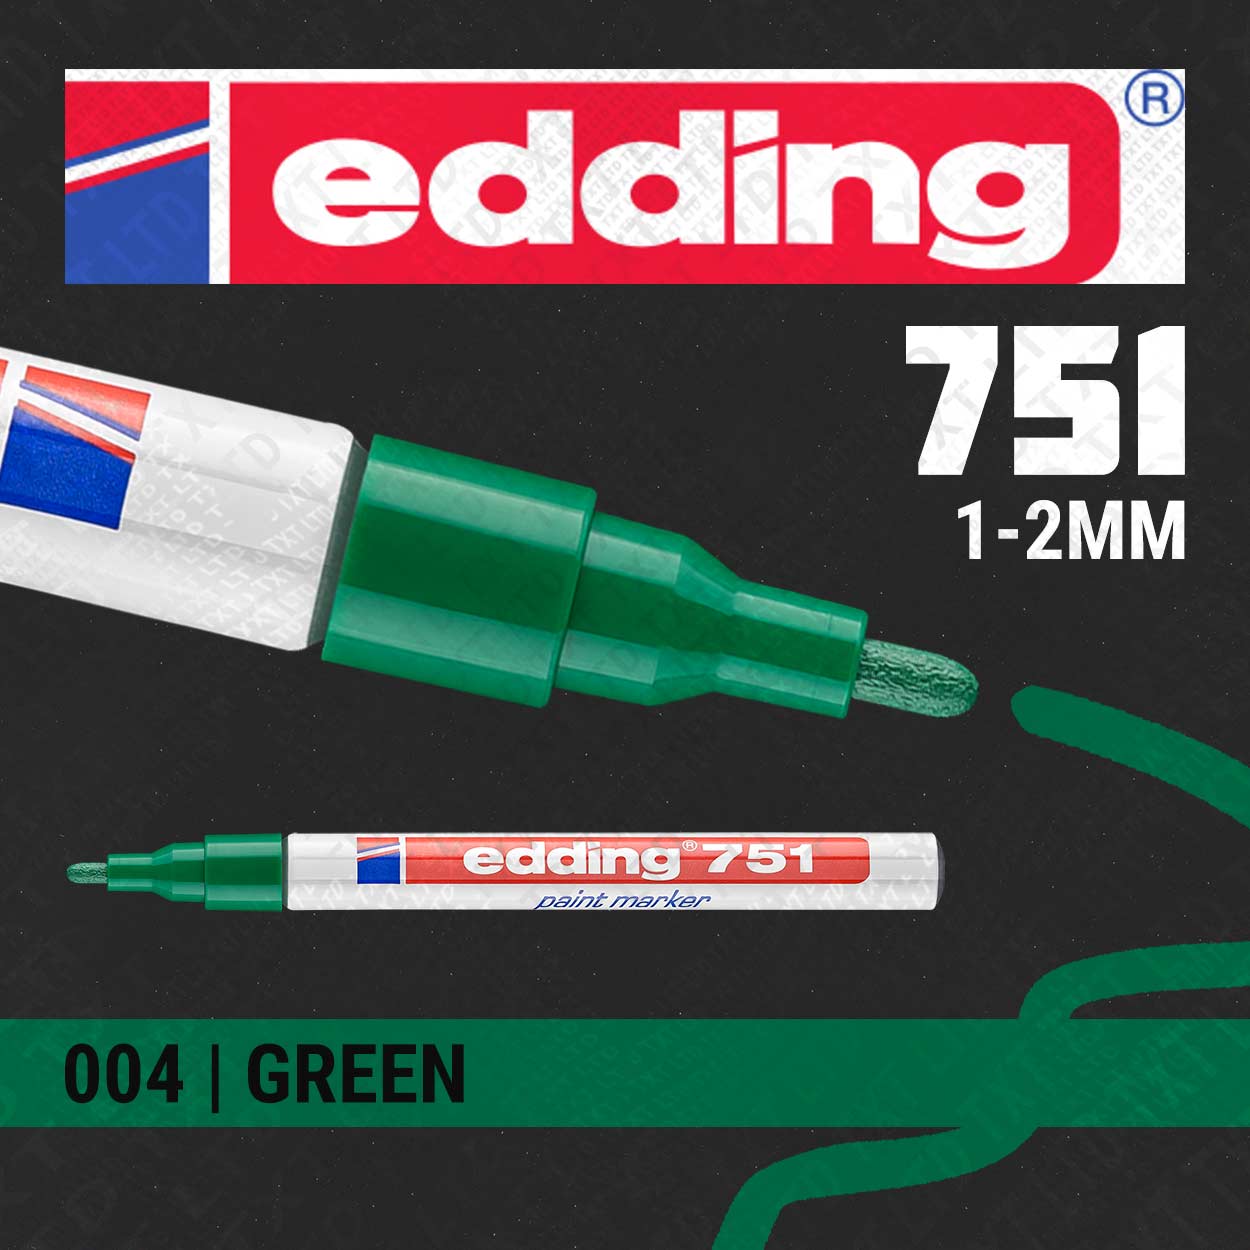 edding 751 Paint Marker 1-2mm